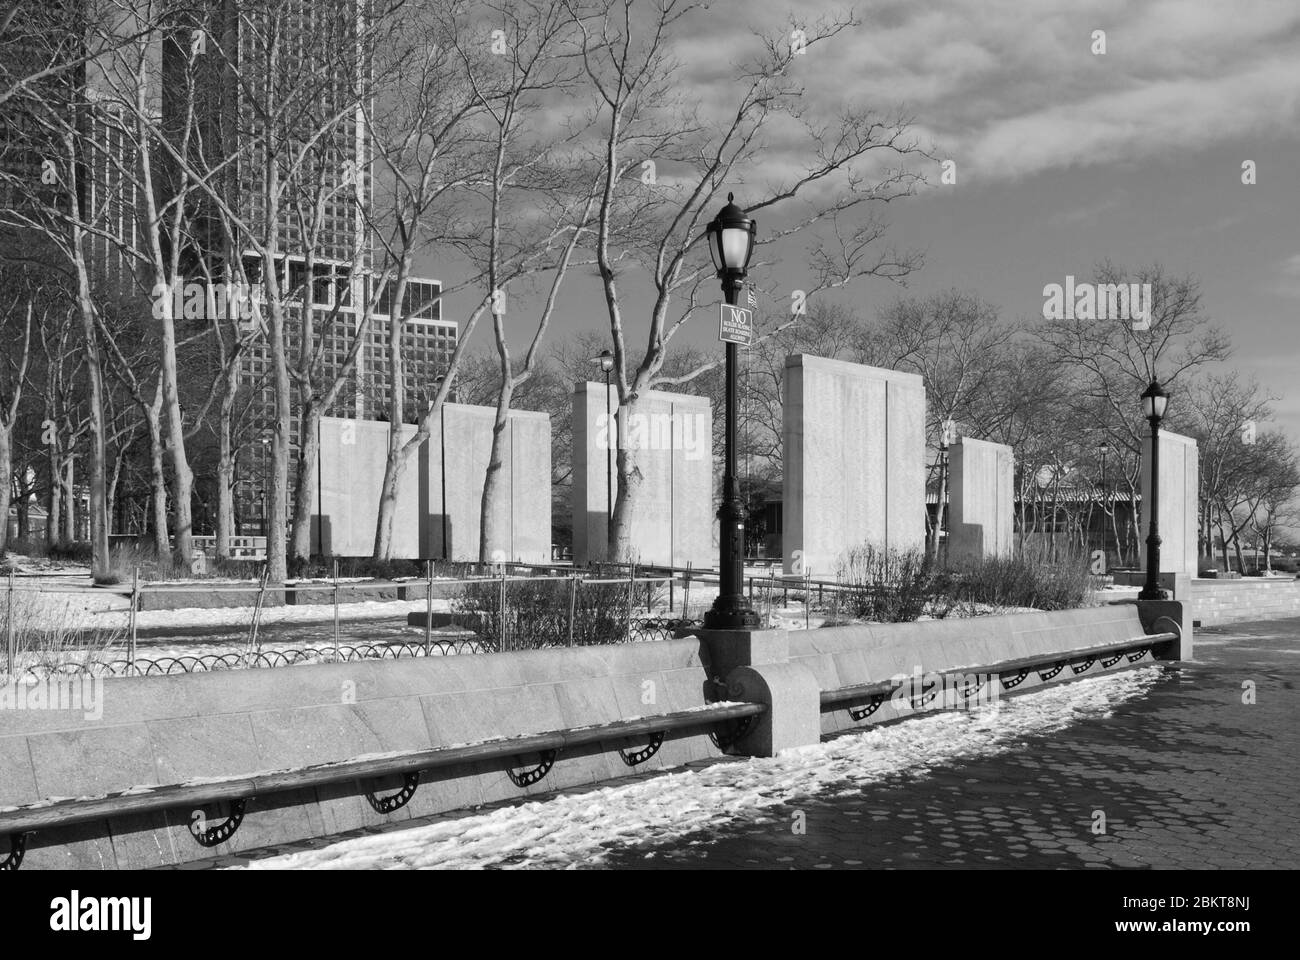 Granite Pylons Snow World War 2 East Coast Memorial Battery Park, NY 10004, United States By Albino Manca Gehron & Seltzer Stock Photo